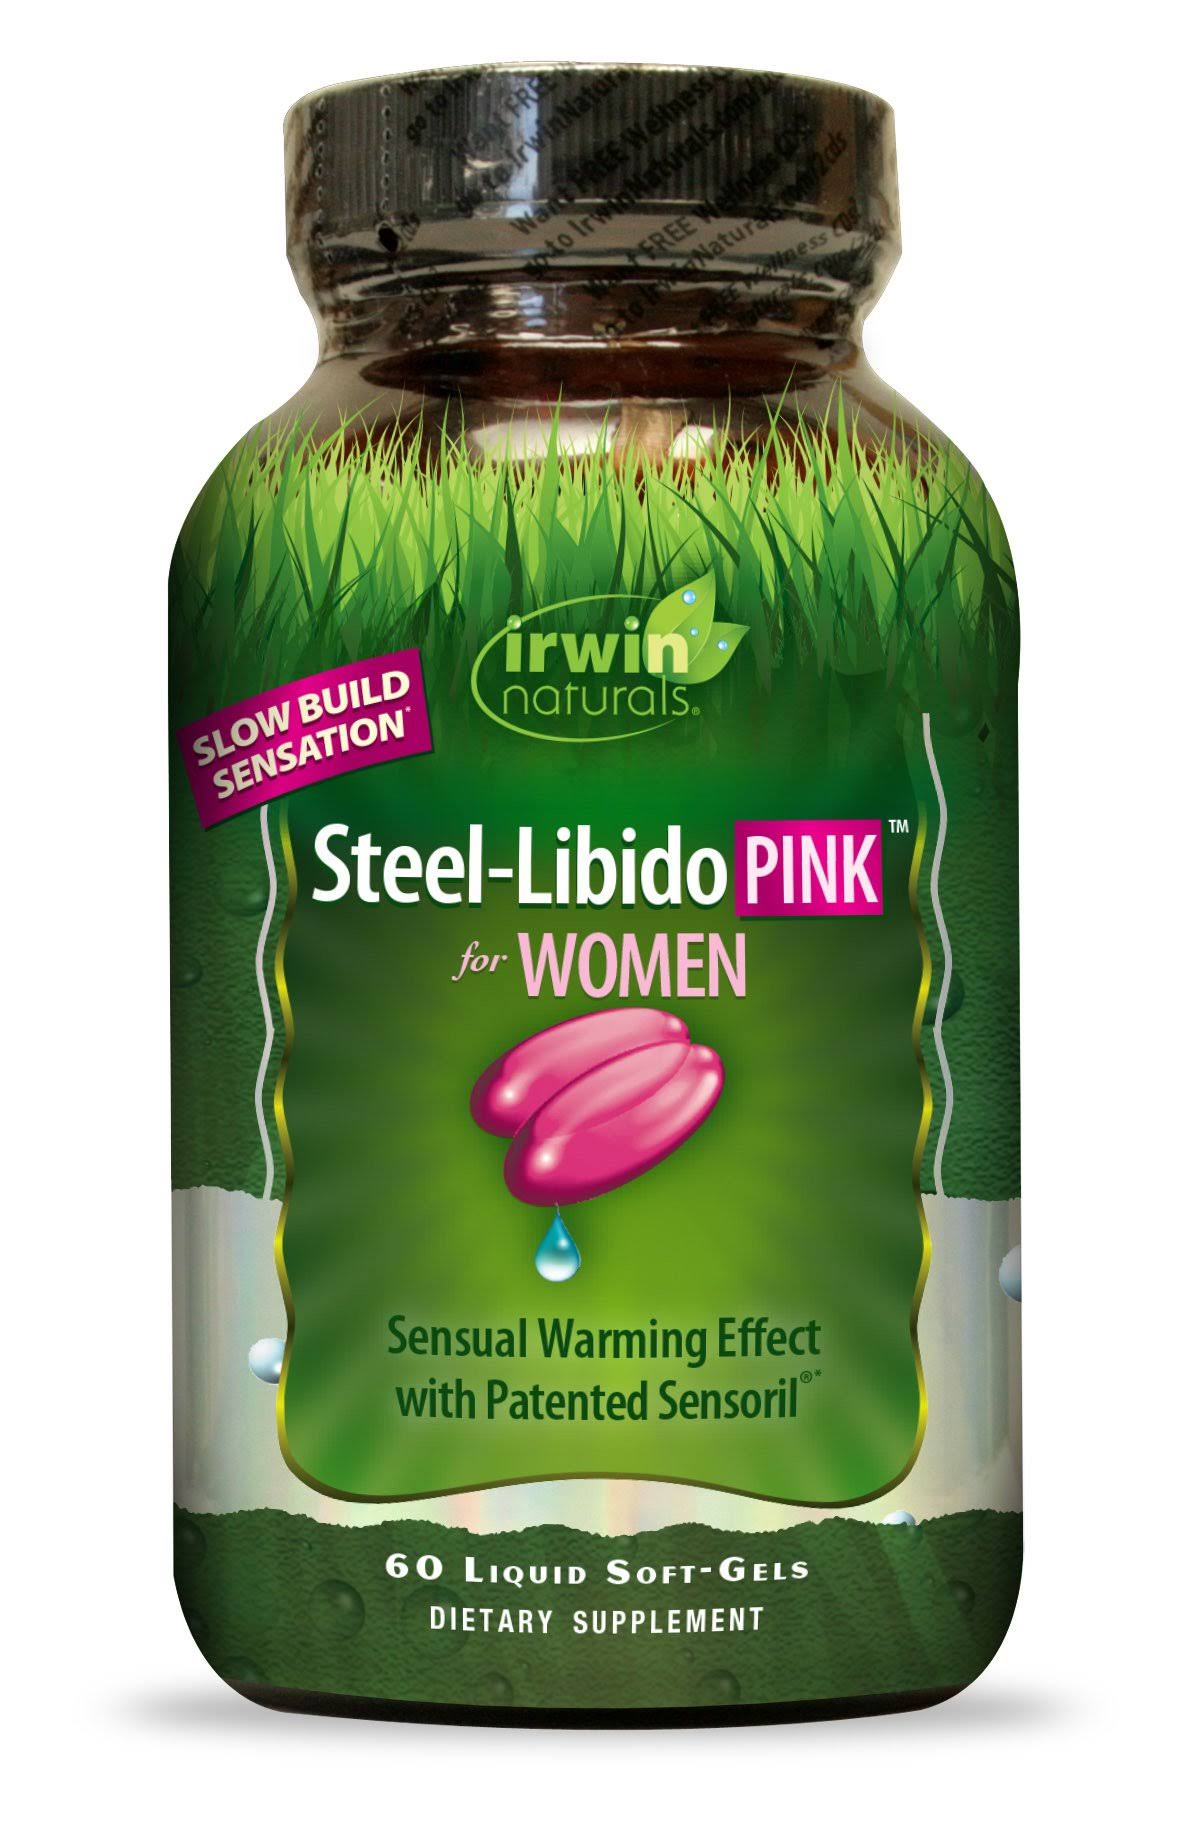 Irwin Naturals Steel-libido Pink for Women Dietary Supplement - 60 Liquid Softgel